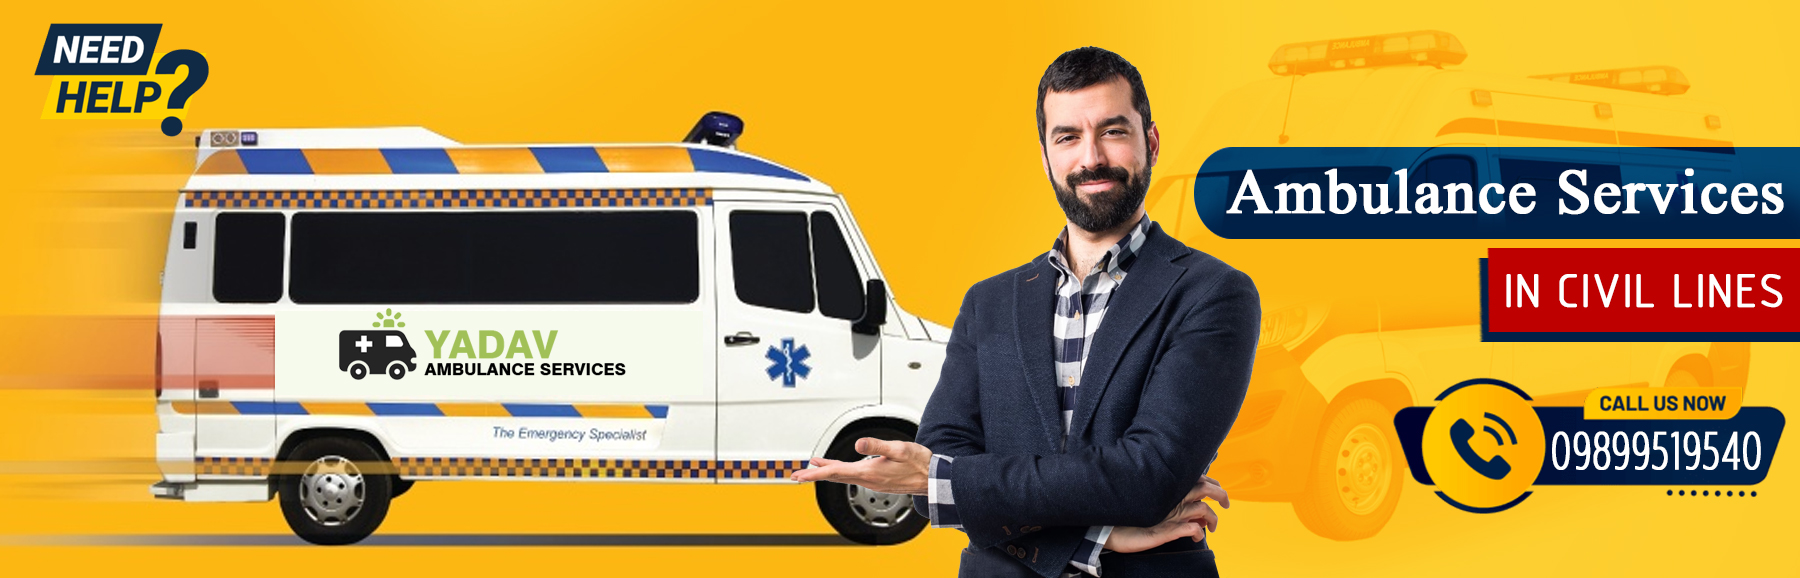 Ambulance Service in Civil Lines